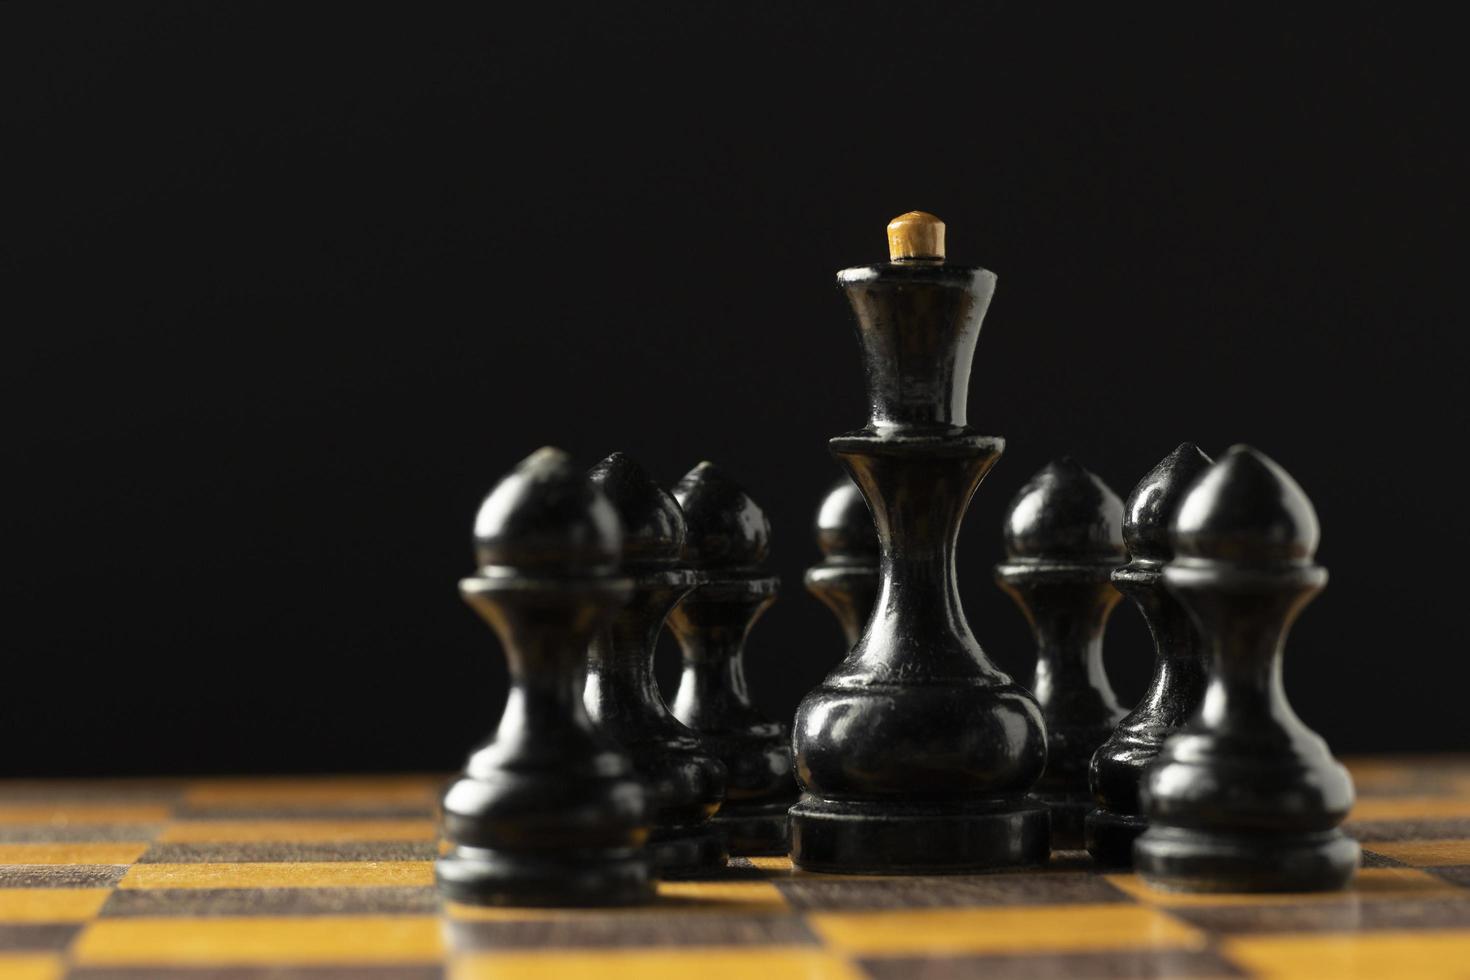 piezas de ajedrez negras sobre tablero de ajedrez foto